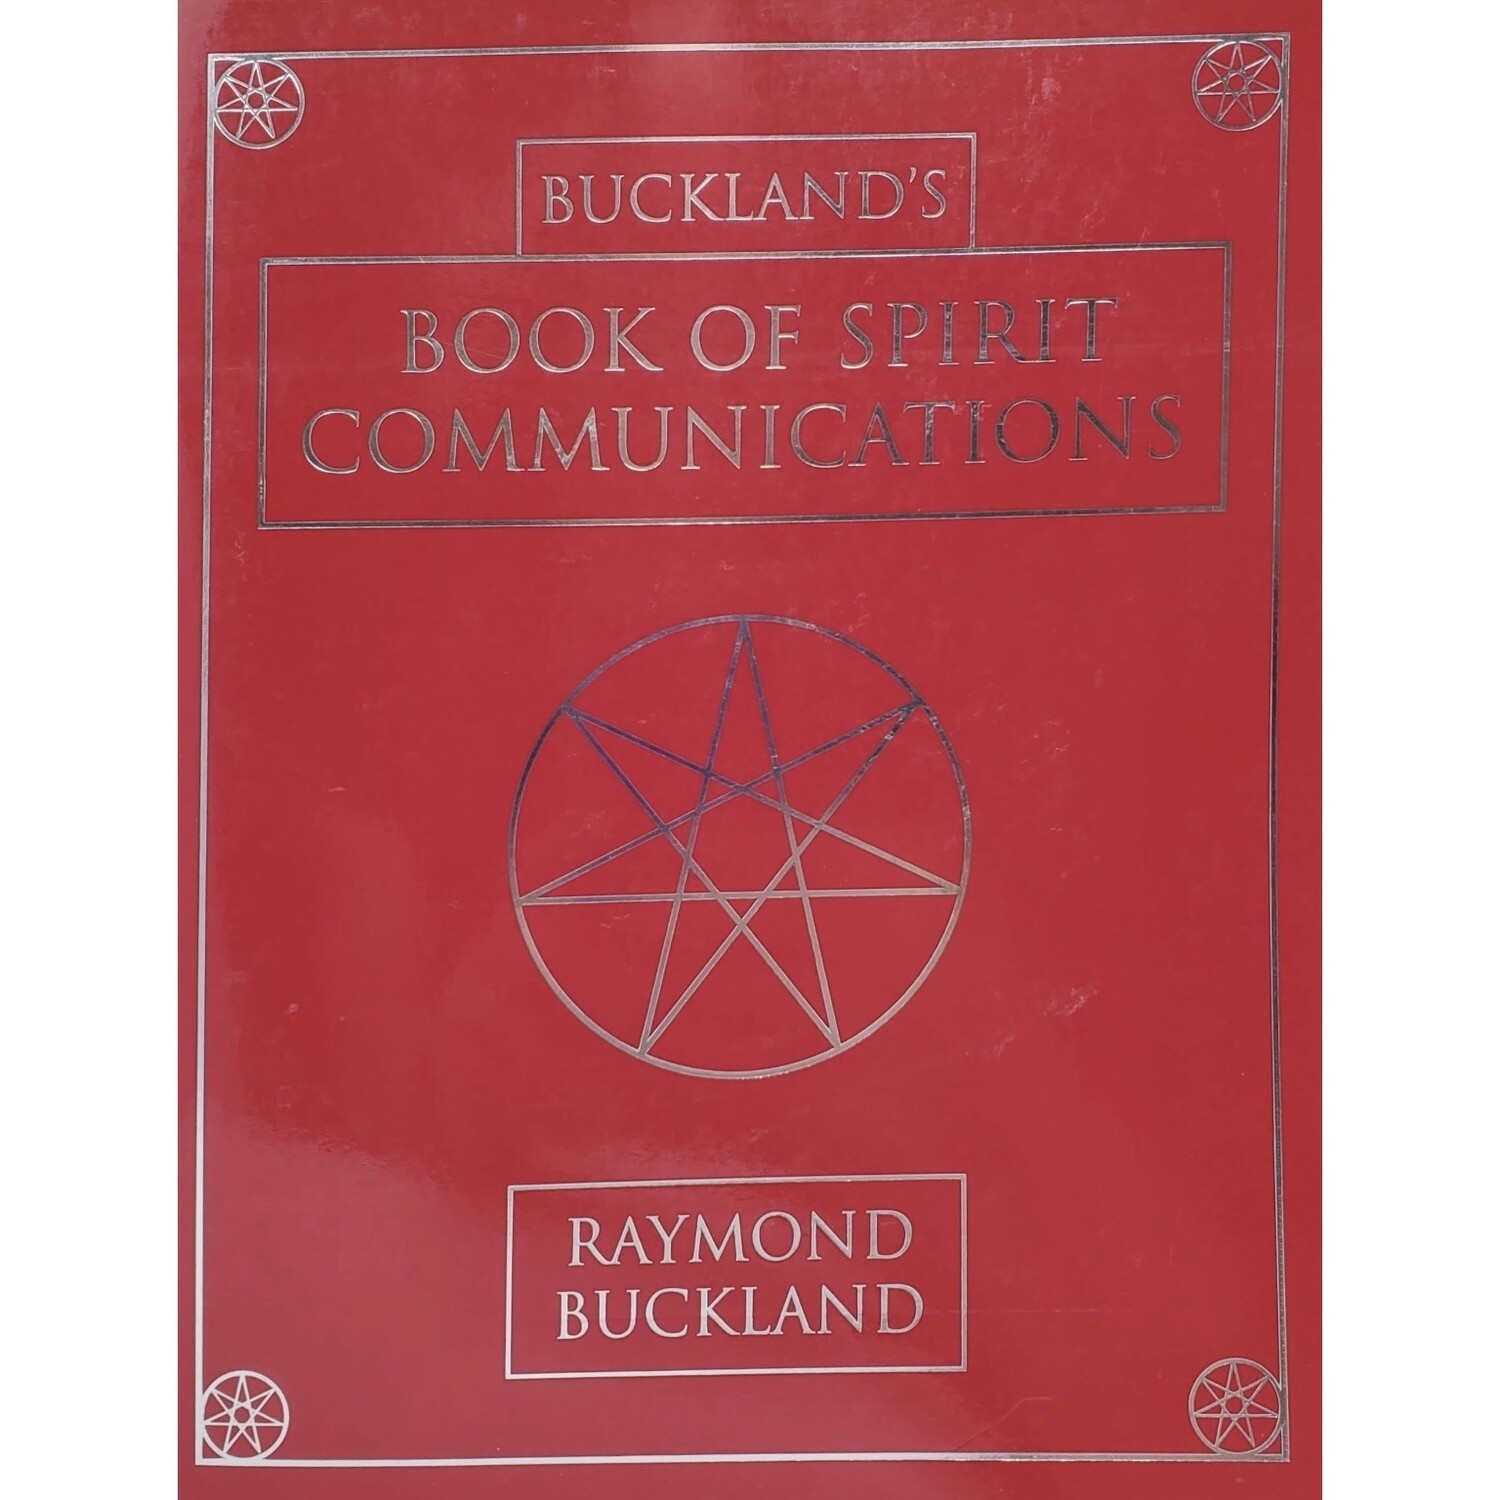 BUCKLAND’S BOOK OF SPIRIT COMMUNICATIONS